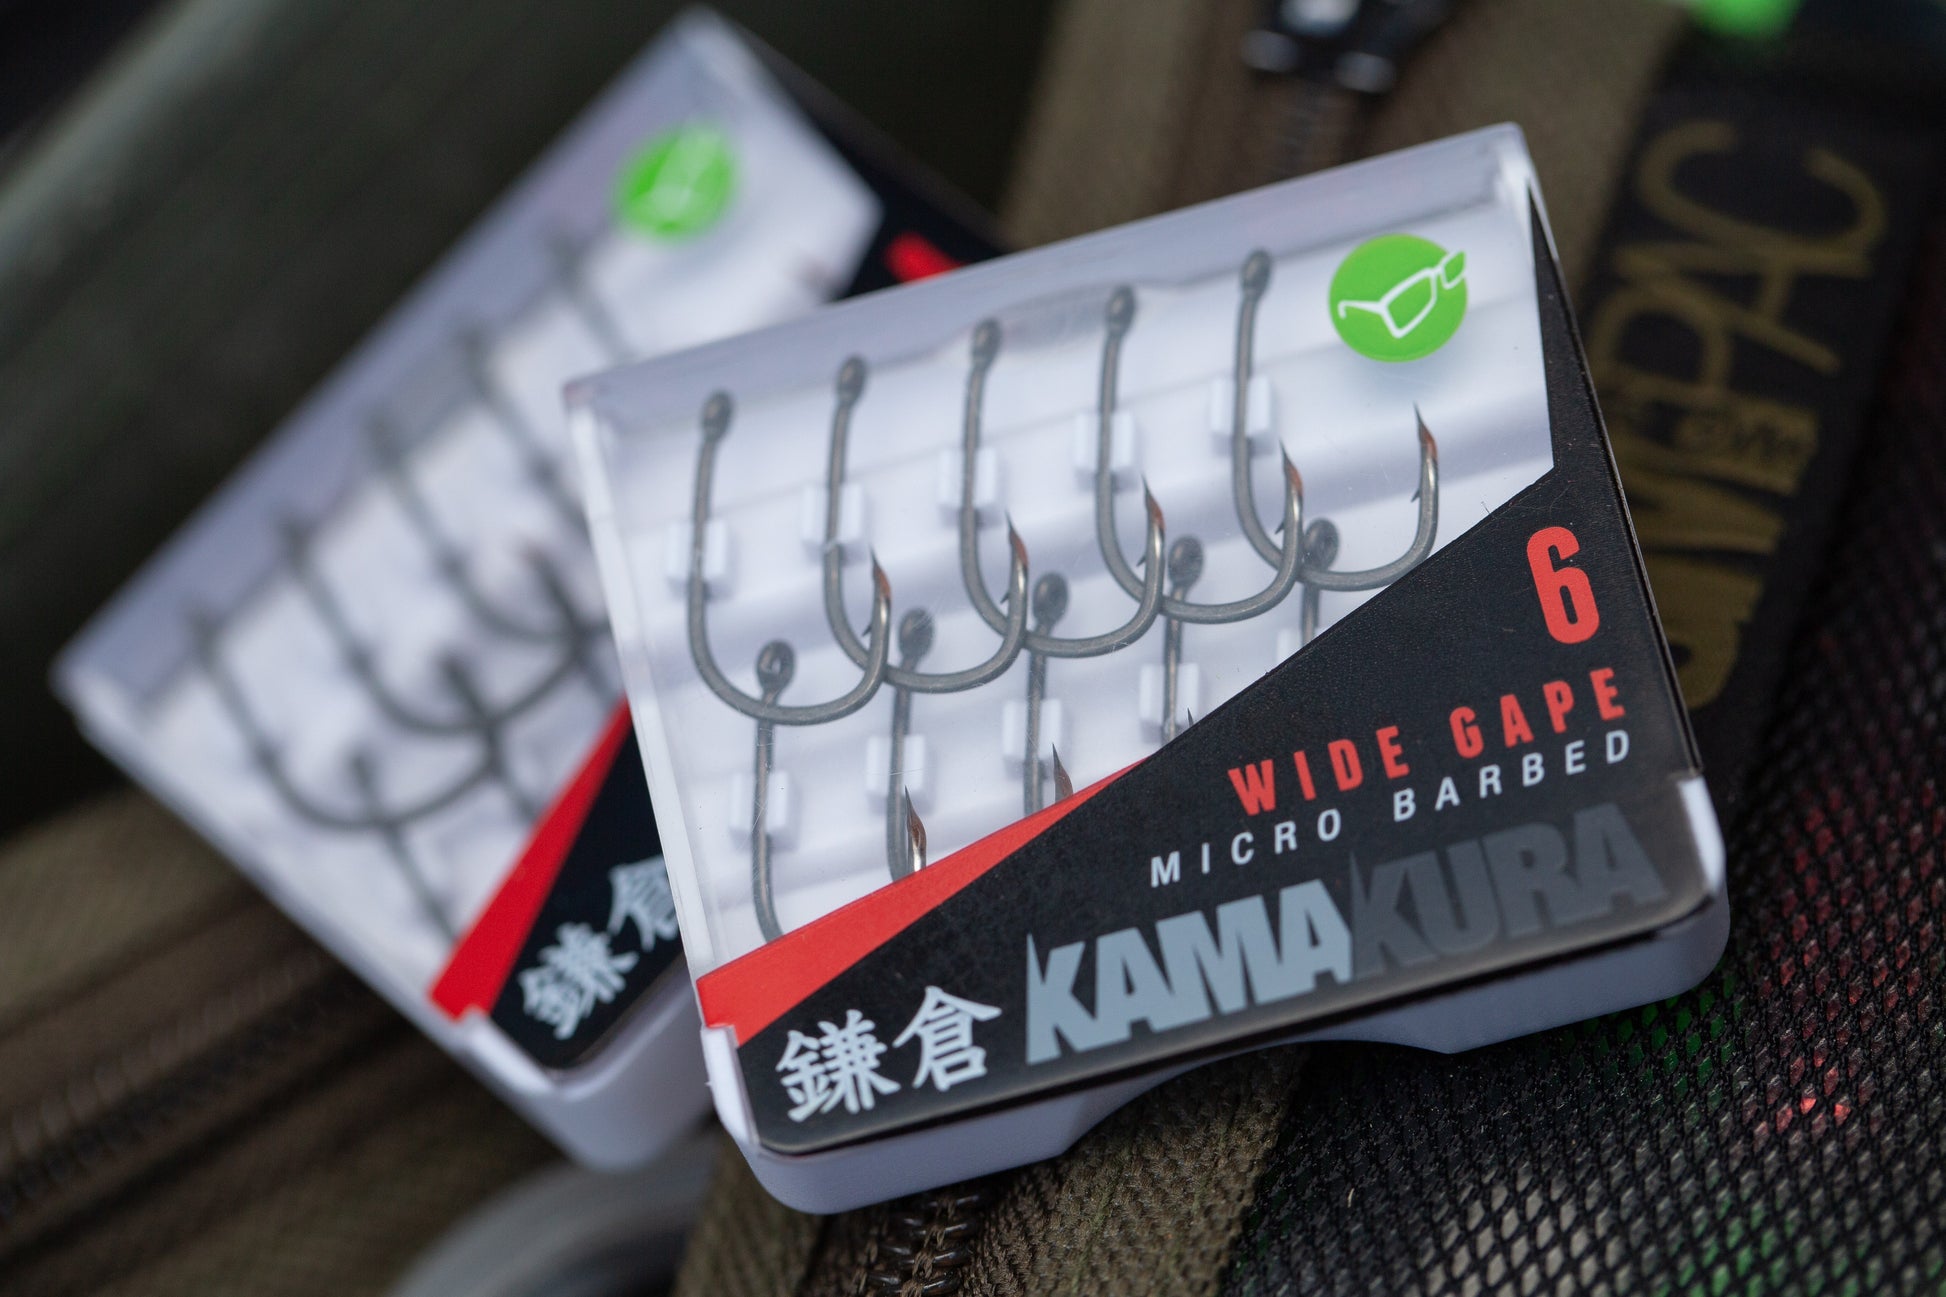 Korda Kamakura Carp Hooks, WIDE GAPE /CHODDY/KRANK Super Sharp Fishing  Hooks